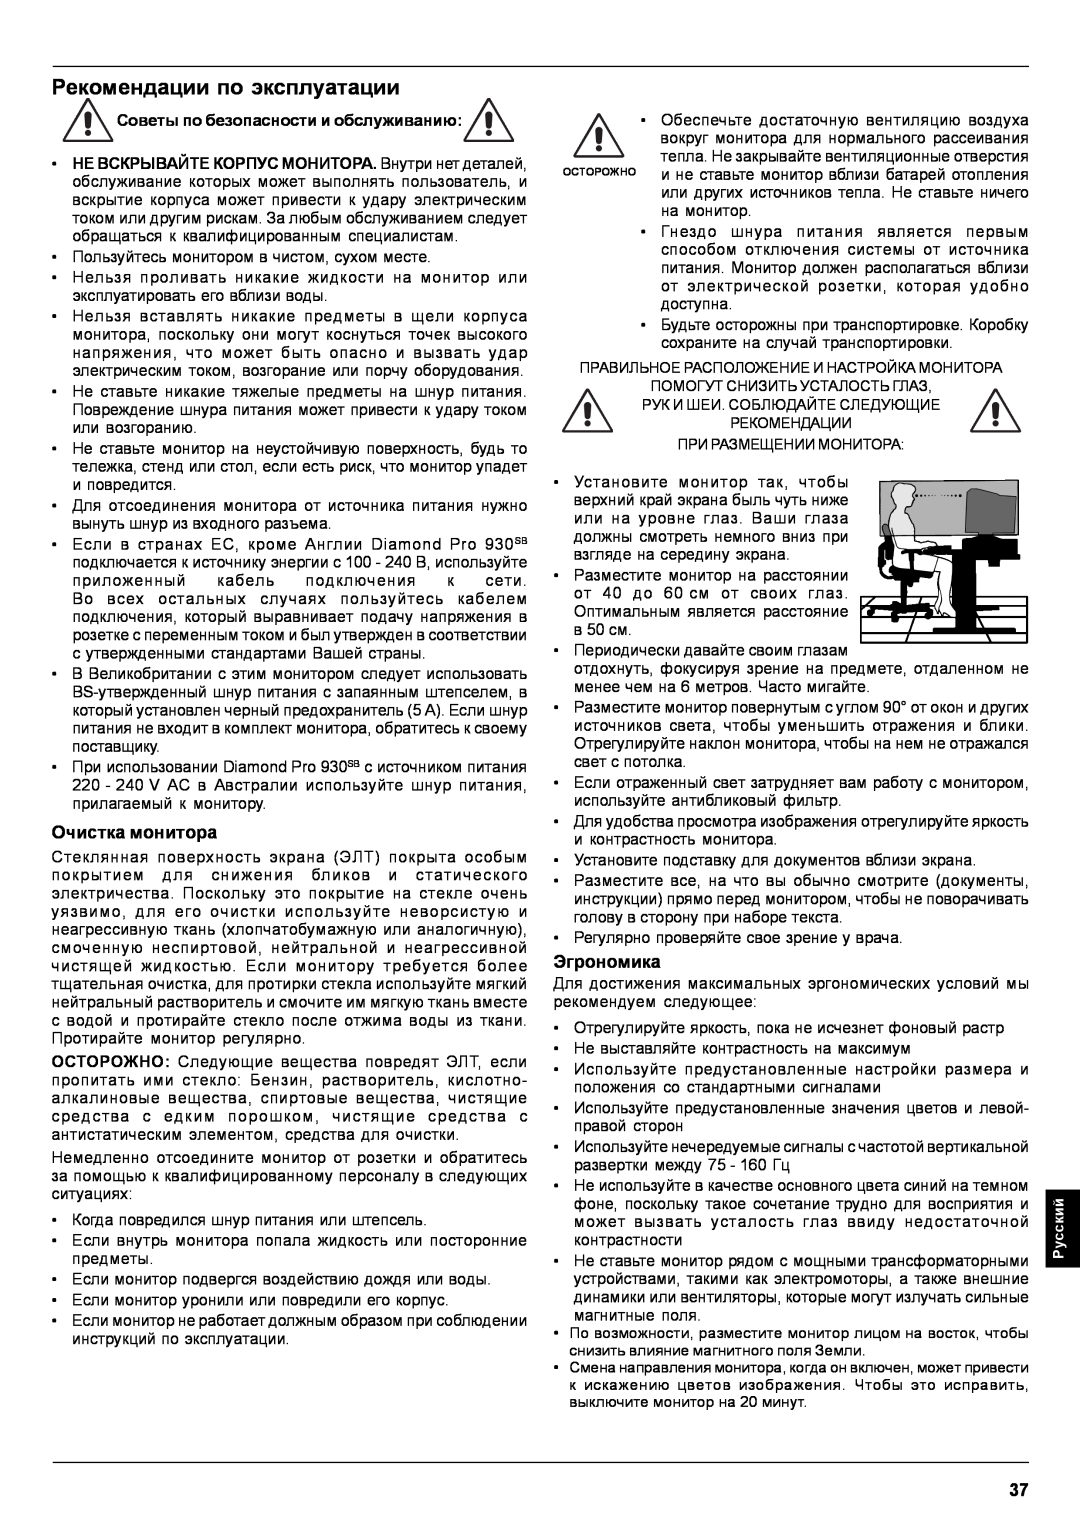 Mitsubishi Electronics Pro 930SB user manual Рекомендации по эксплуатации, Очистка монитора, Эгрономика 